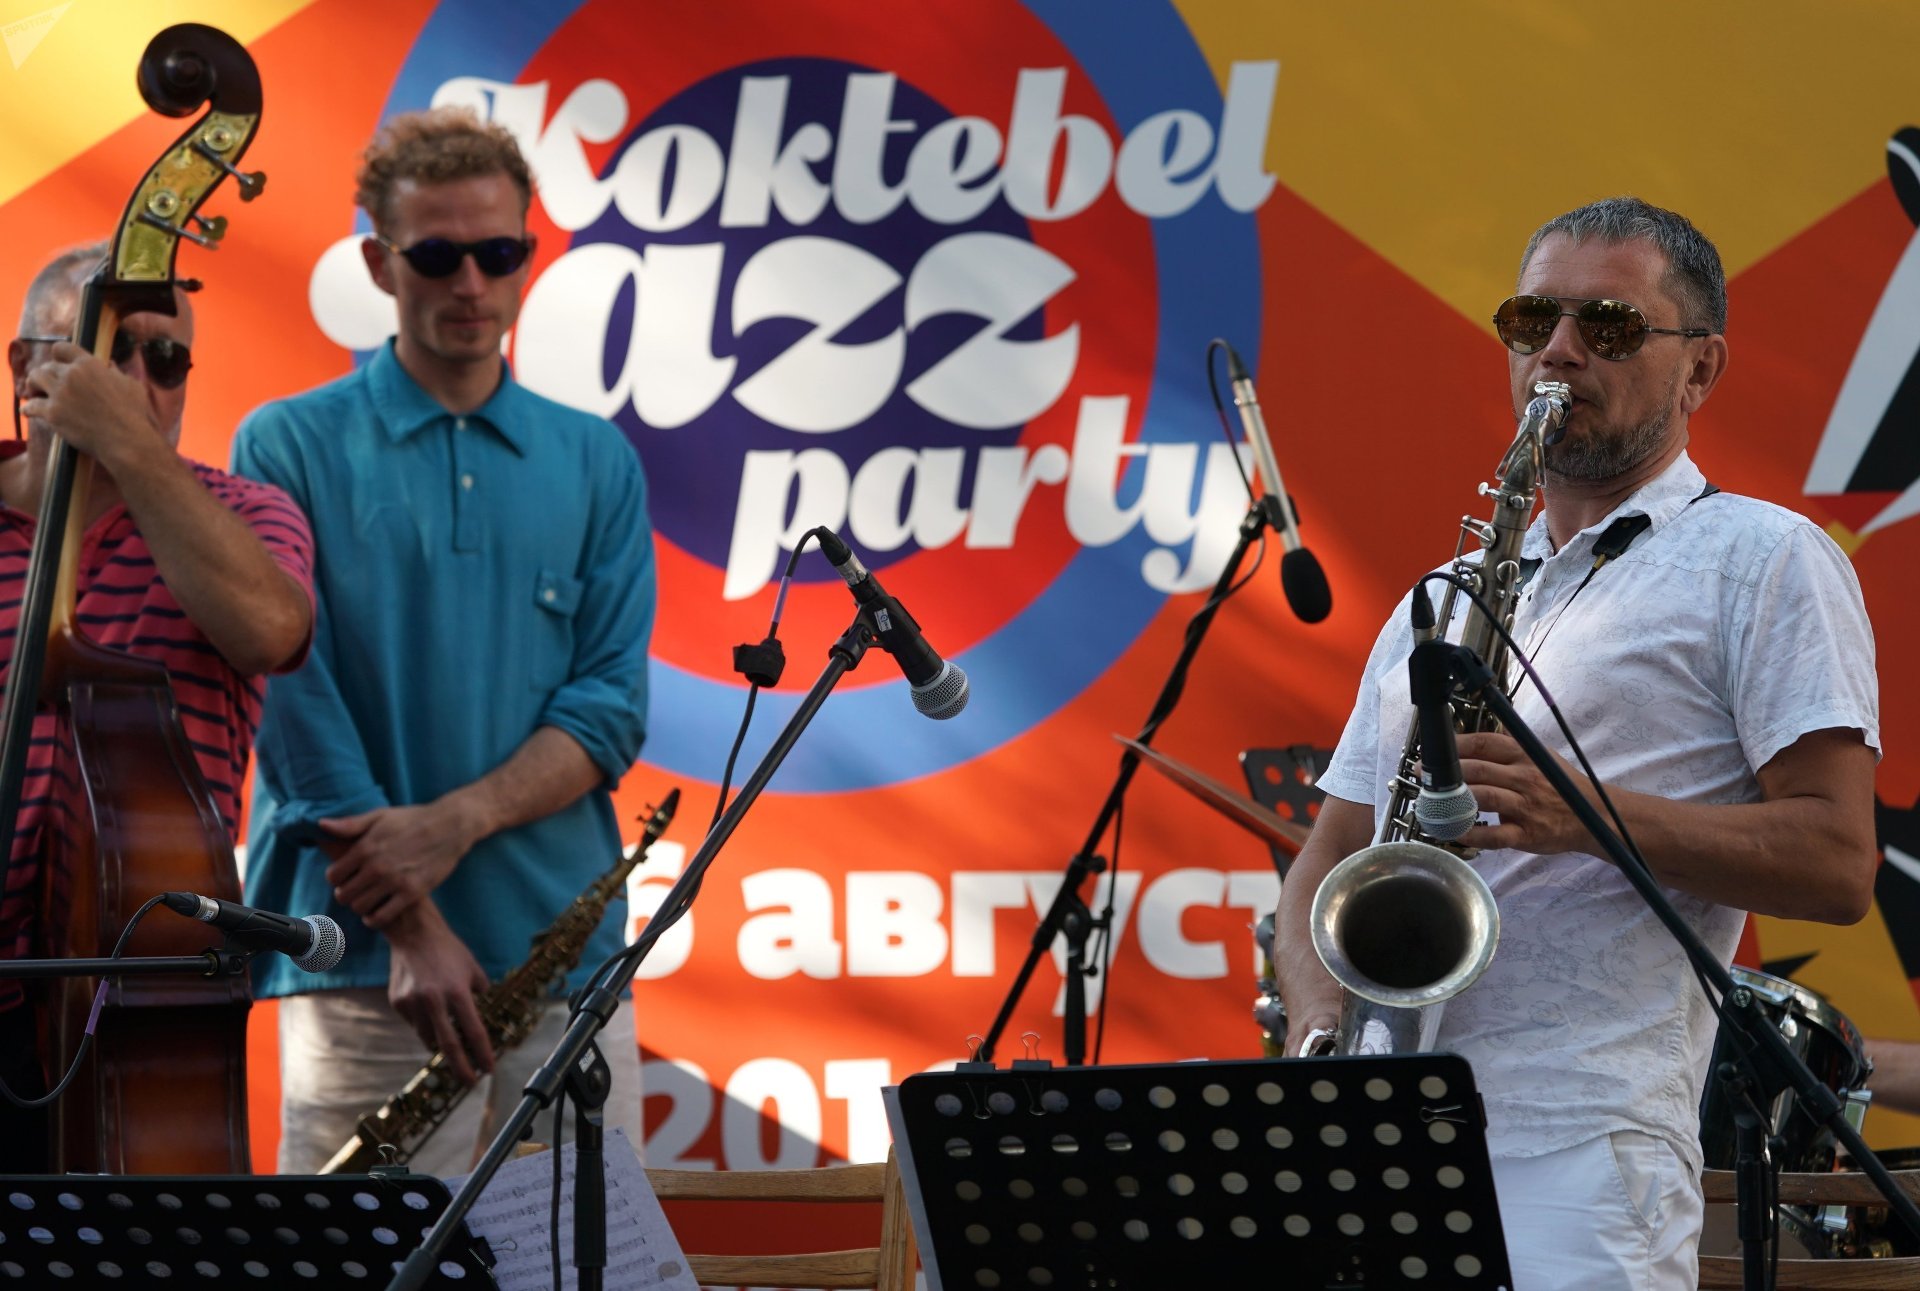     Koktebel Jazz Party